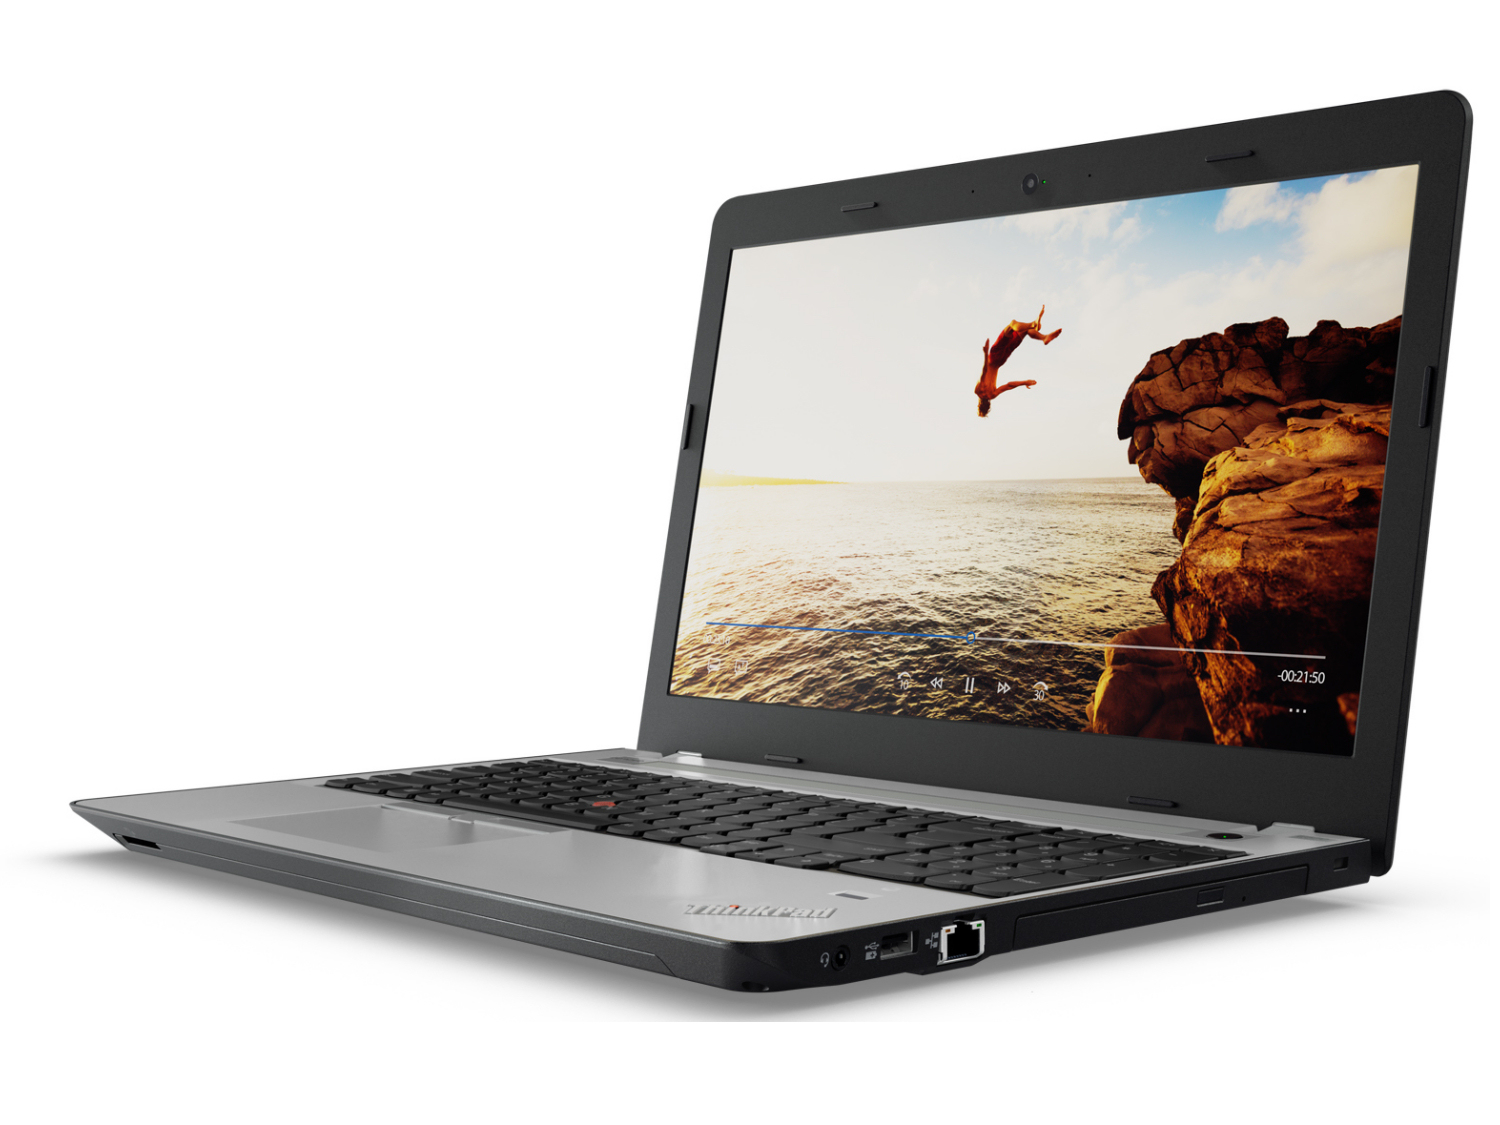 Lenovo ThinkPad E570 (7200U, HD Display) Laptop Review 